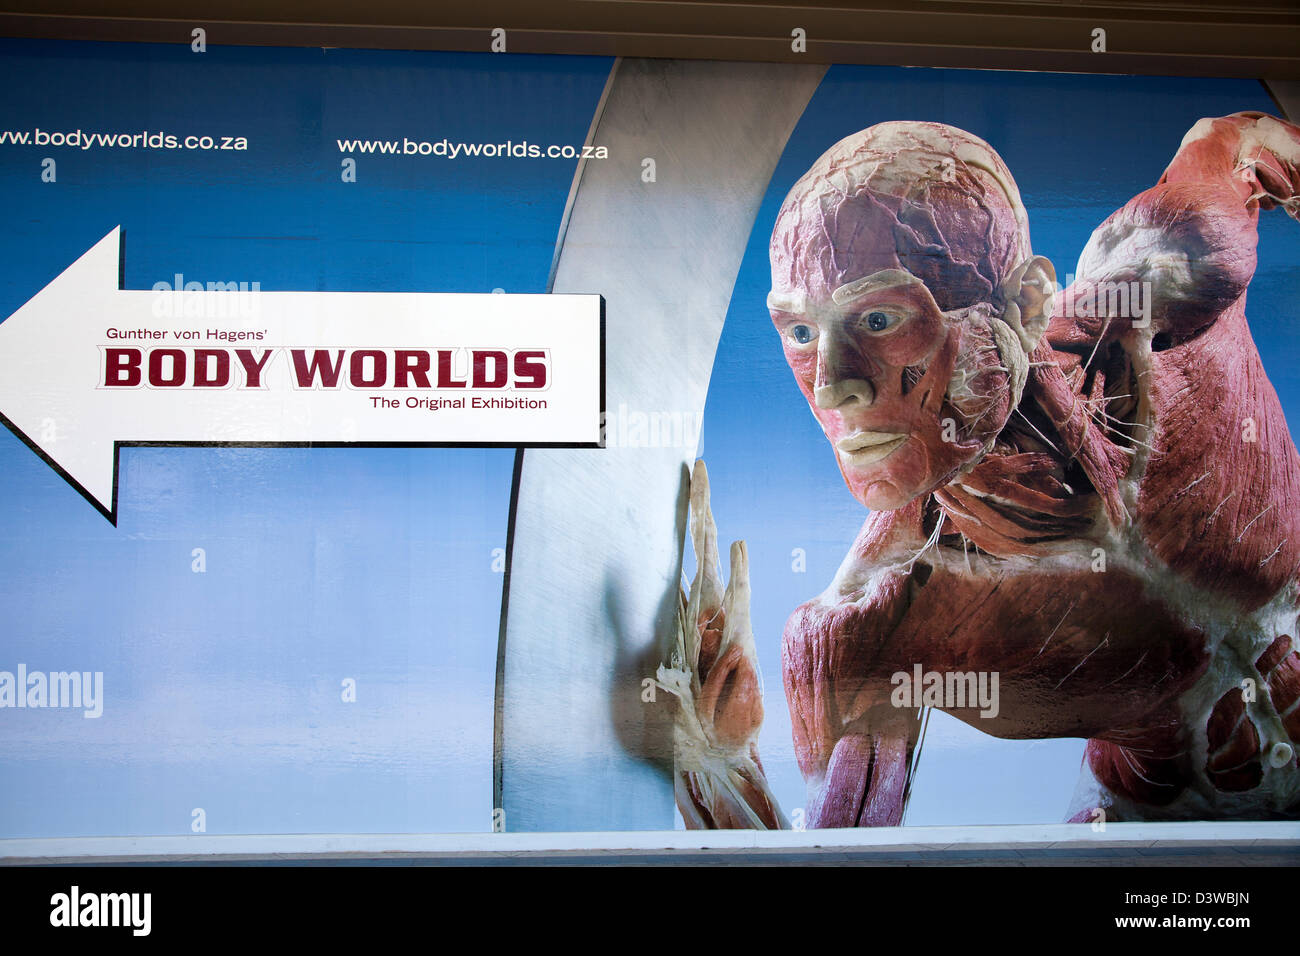 Gunther von Hagen's Body Worlds Show Poster in Cape Town - South Africa Stock Photo